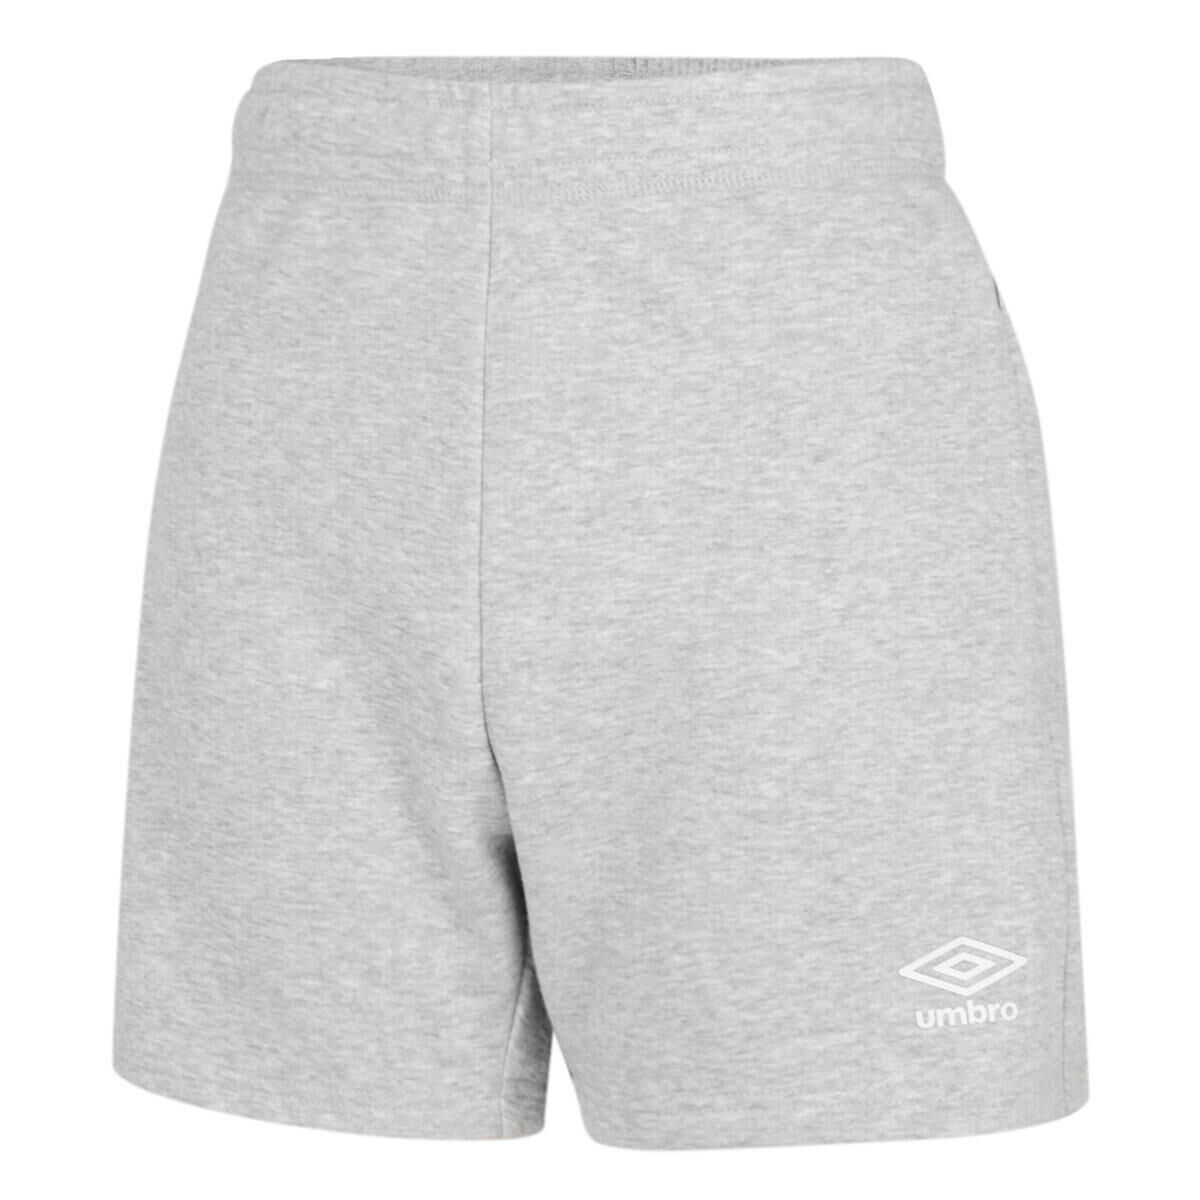 UMBRO Womens/Ladies Club Leisure Shorts (Grey Marl/White)